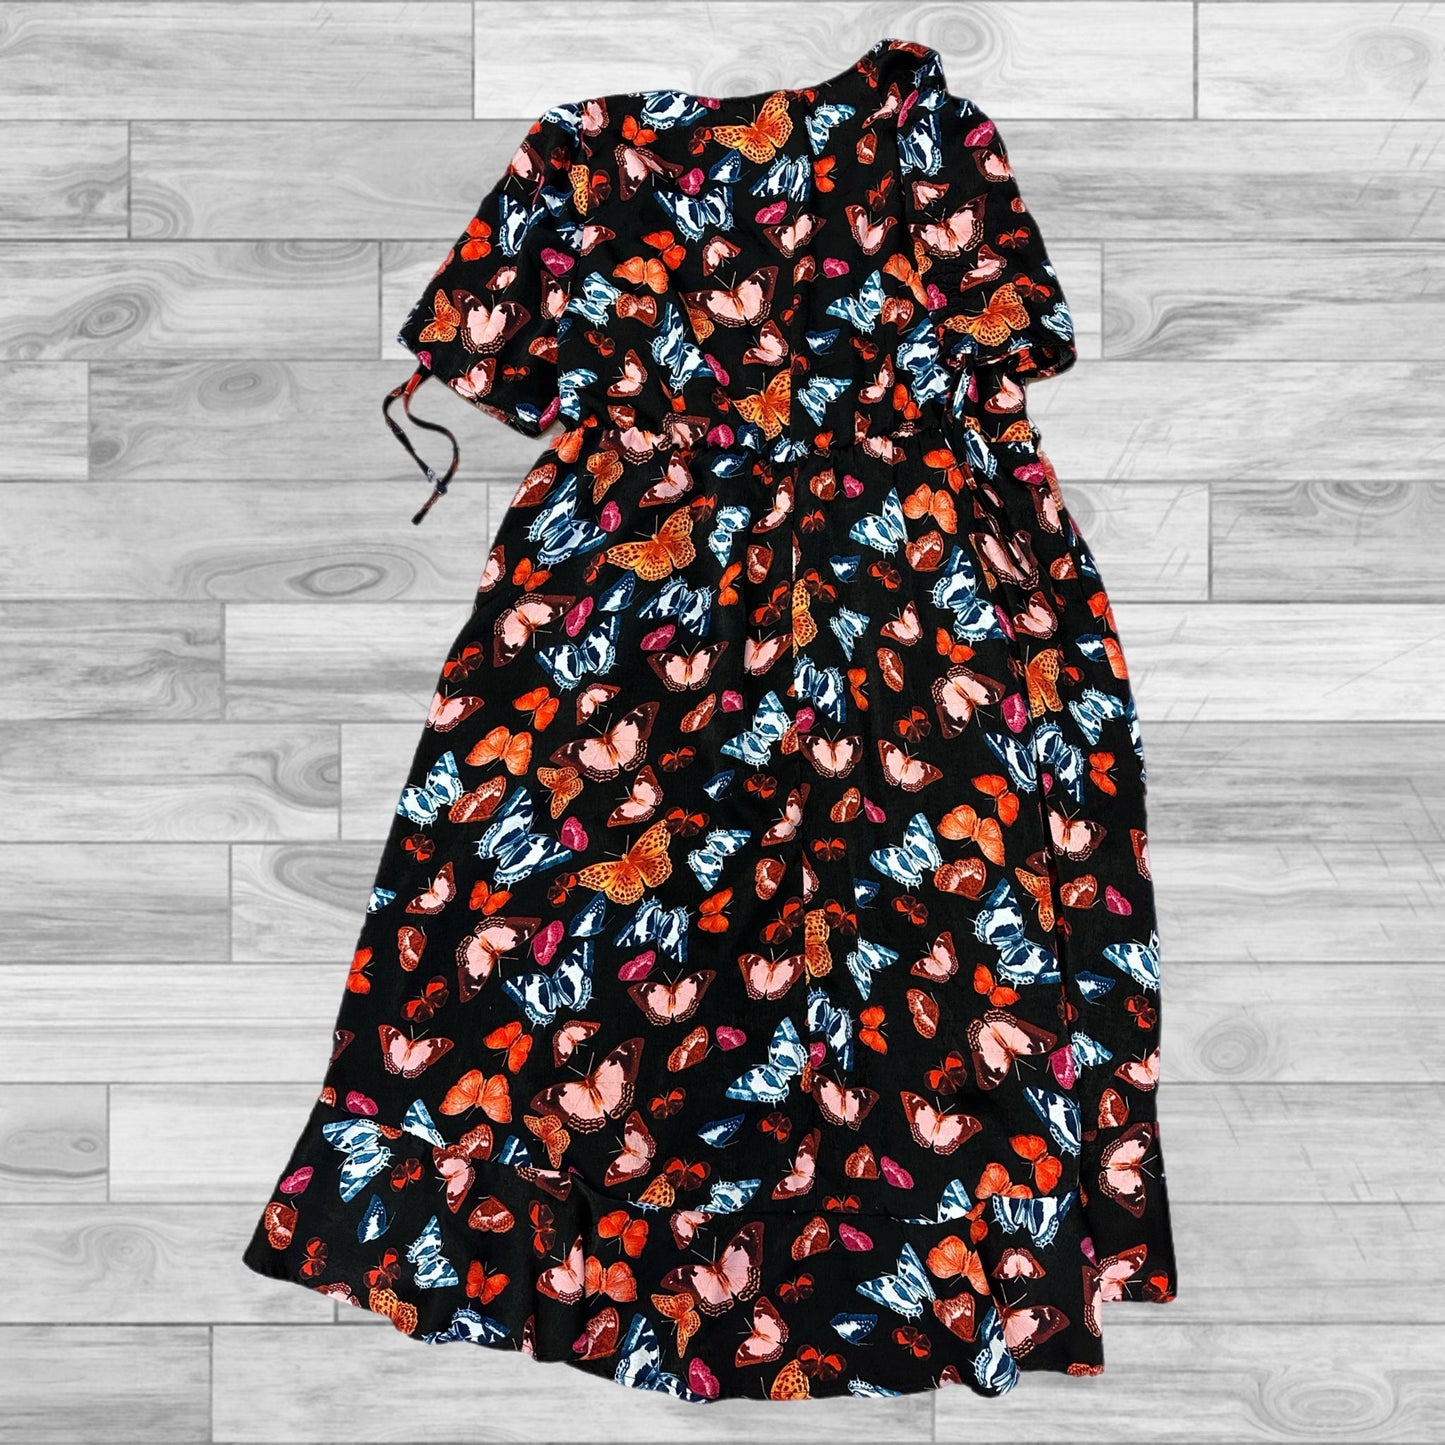 Multi-colored Dress Casual Maxi Torrid, Size 2x